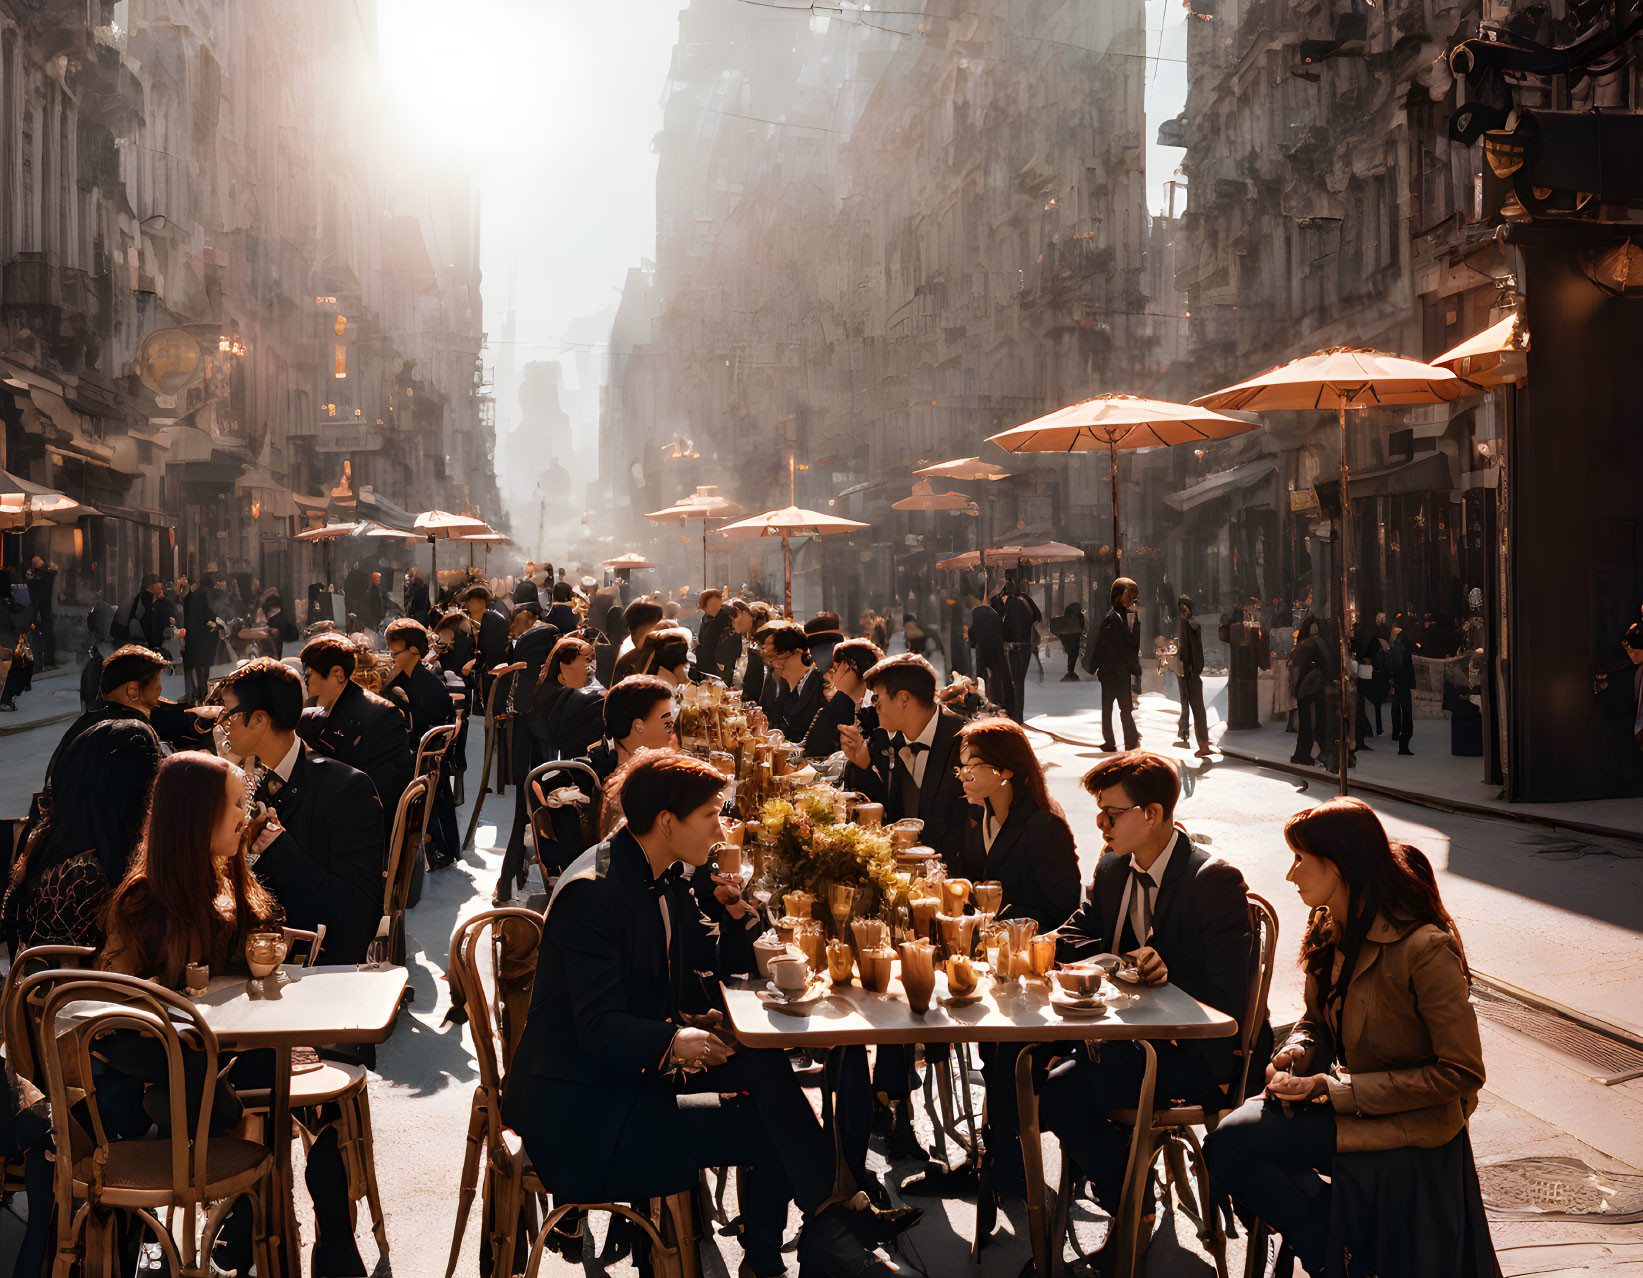 Bustling Street Outdoor Dining Scene in Golden Sunlight